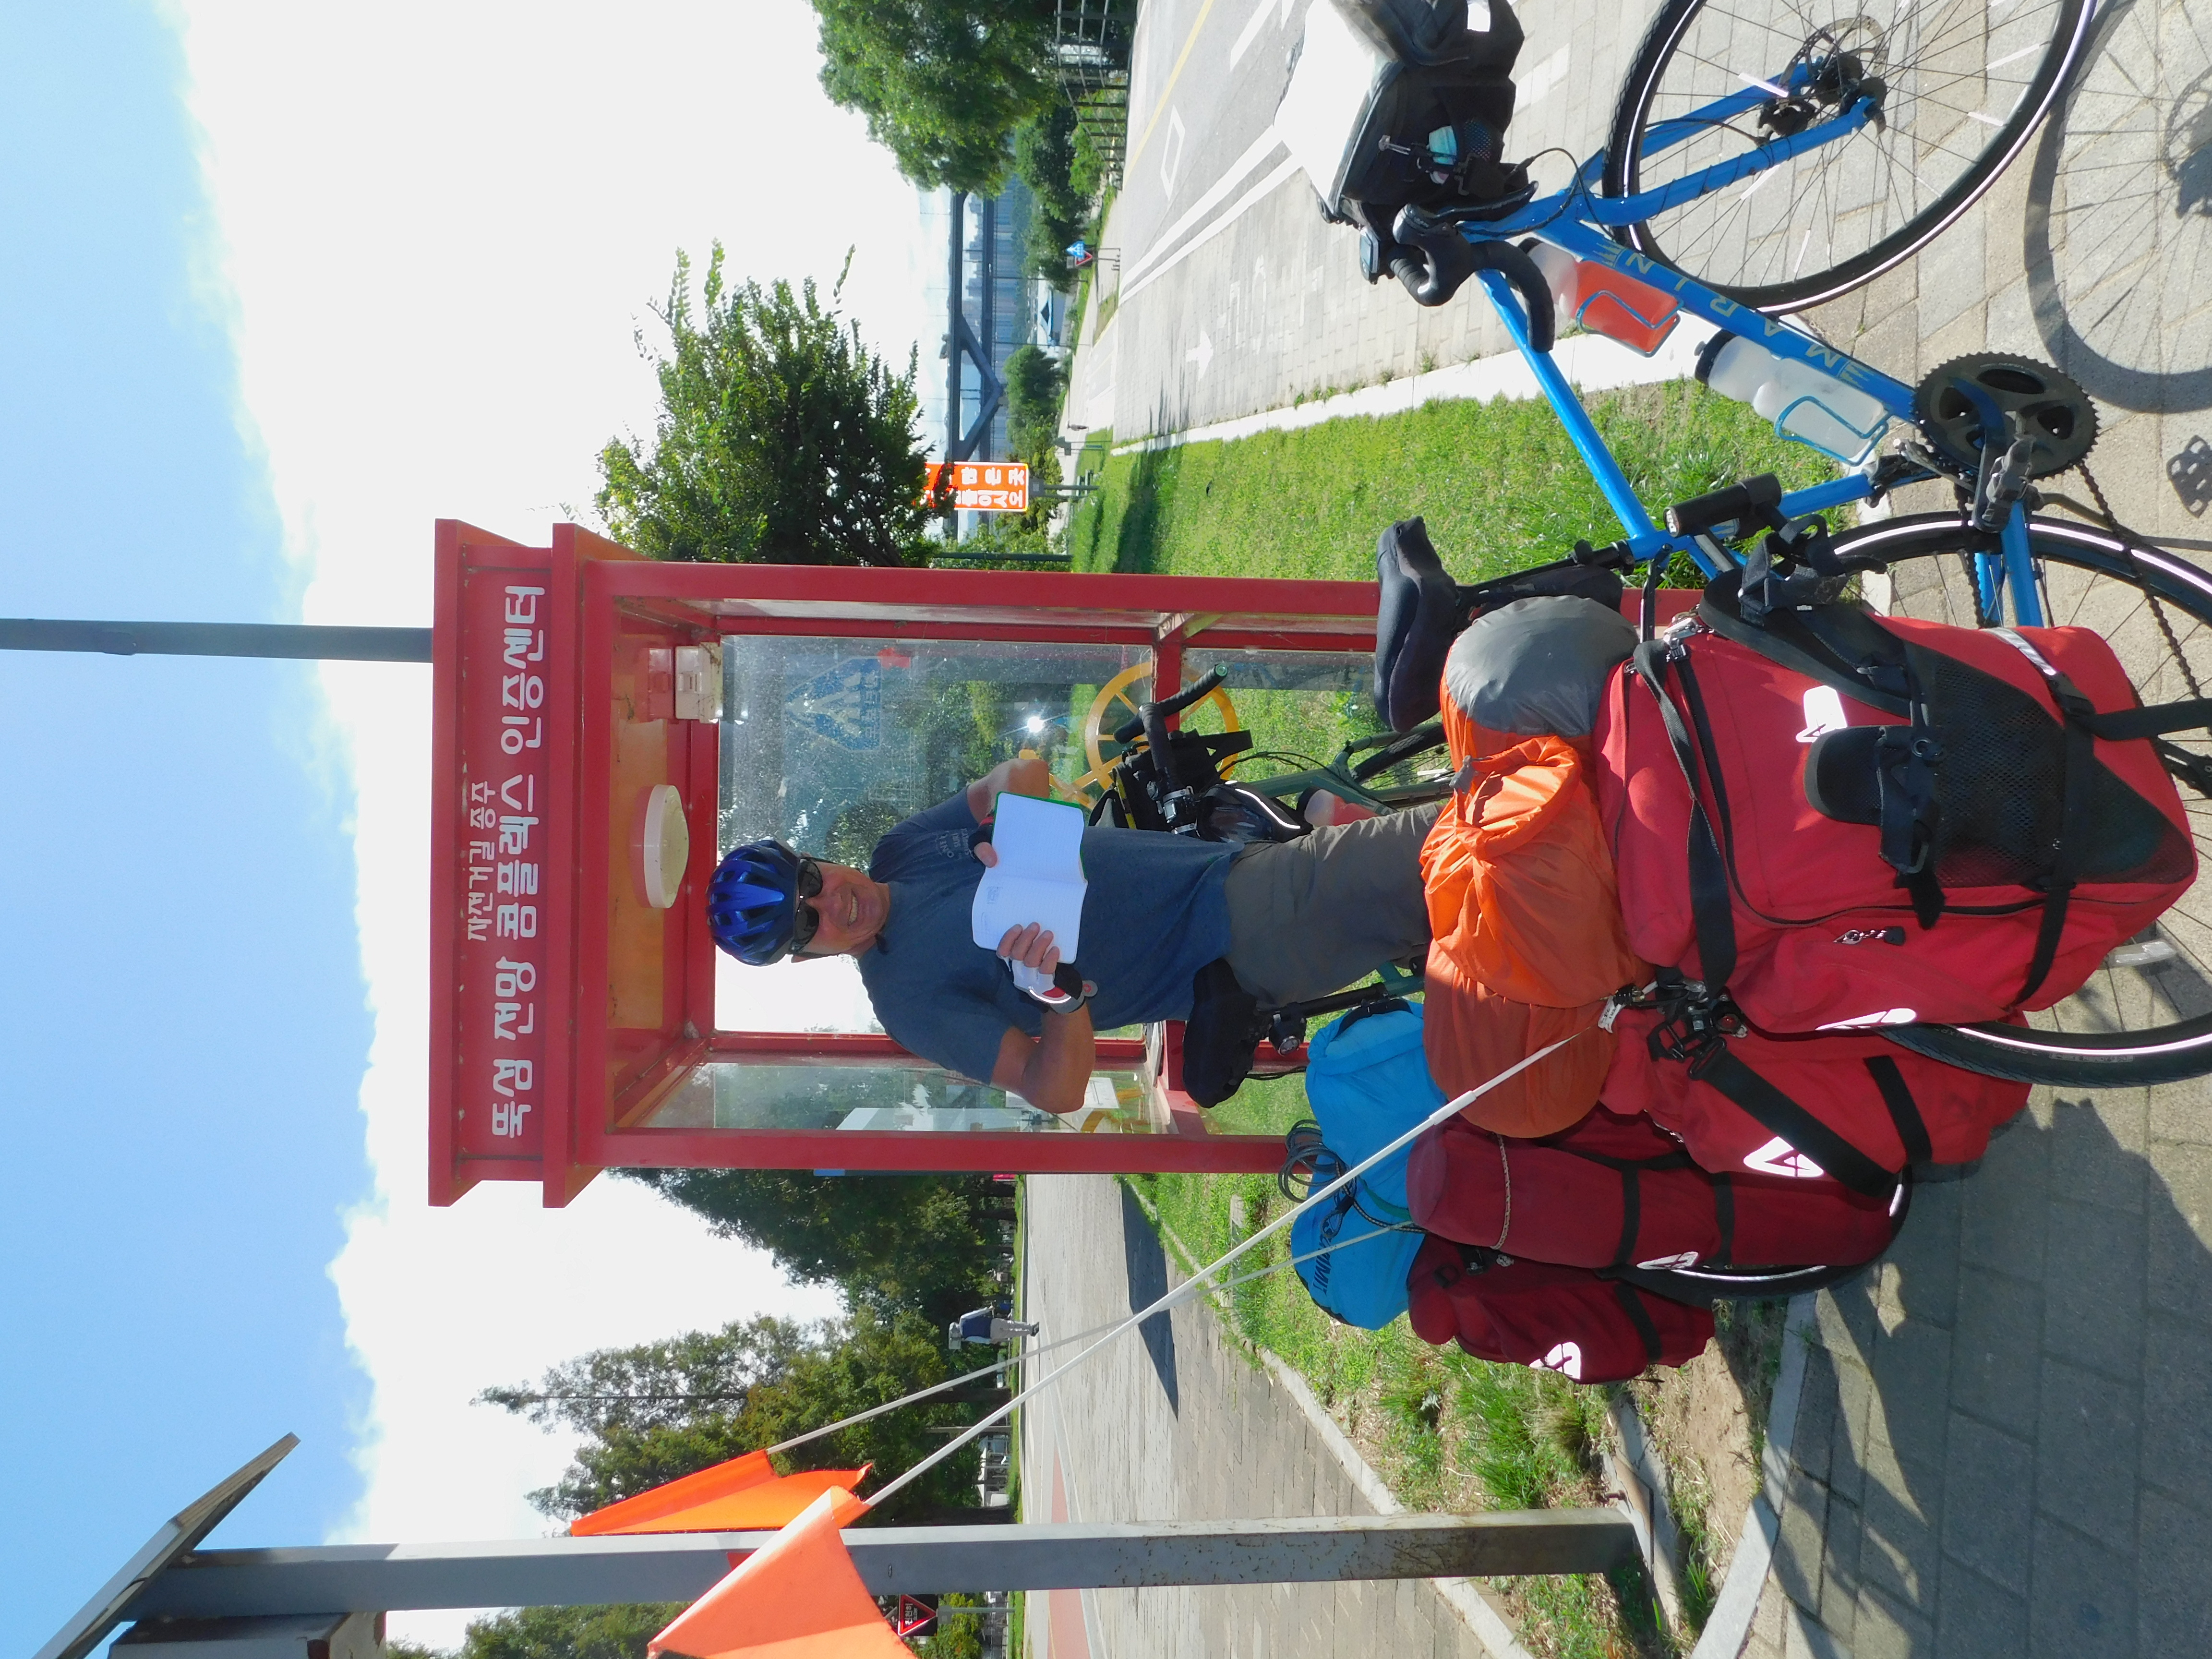 korea cycling tour